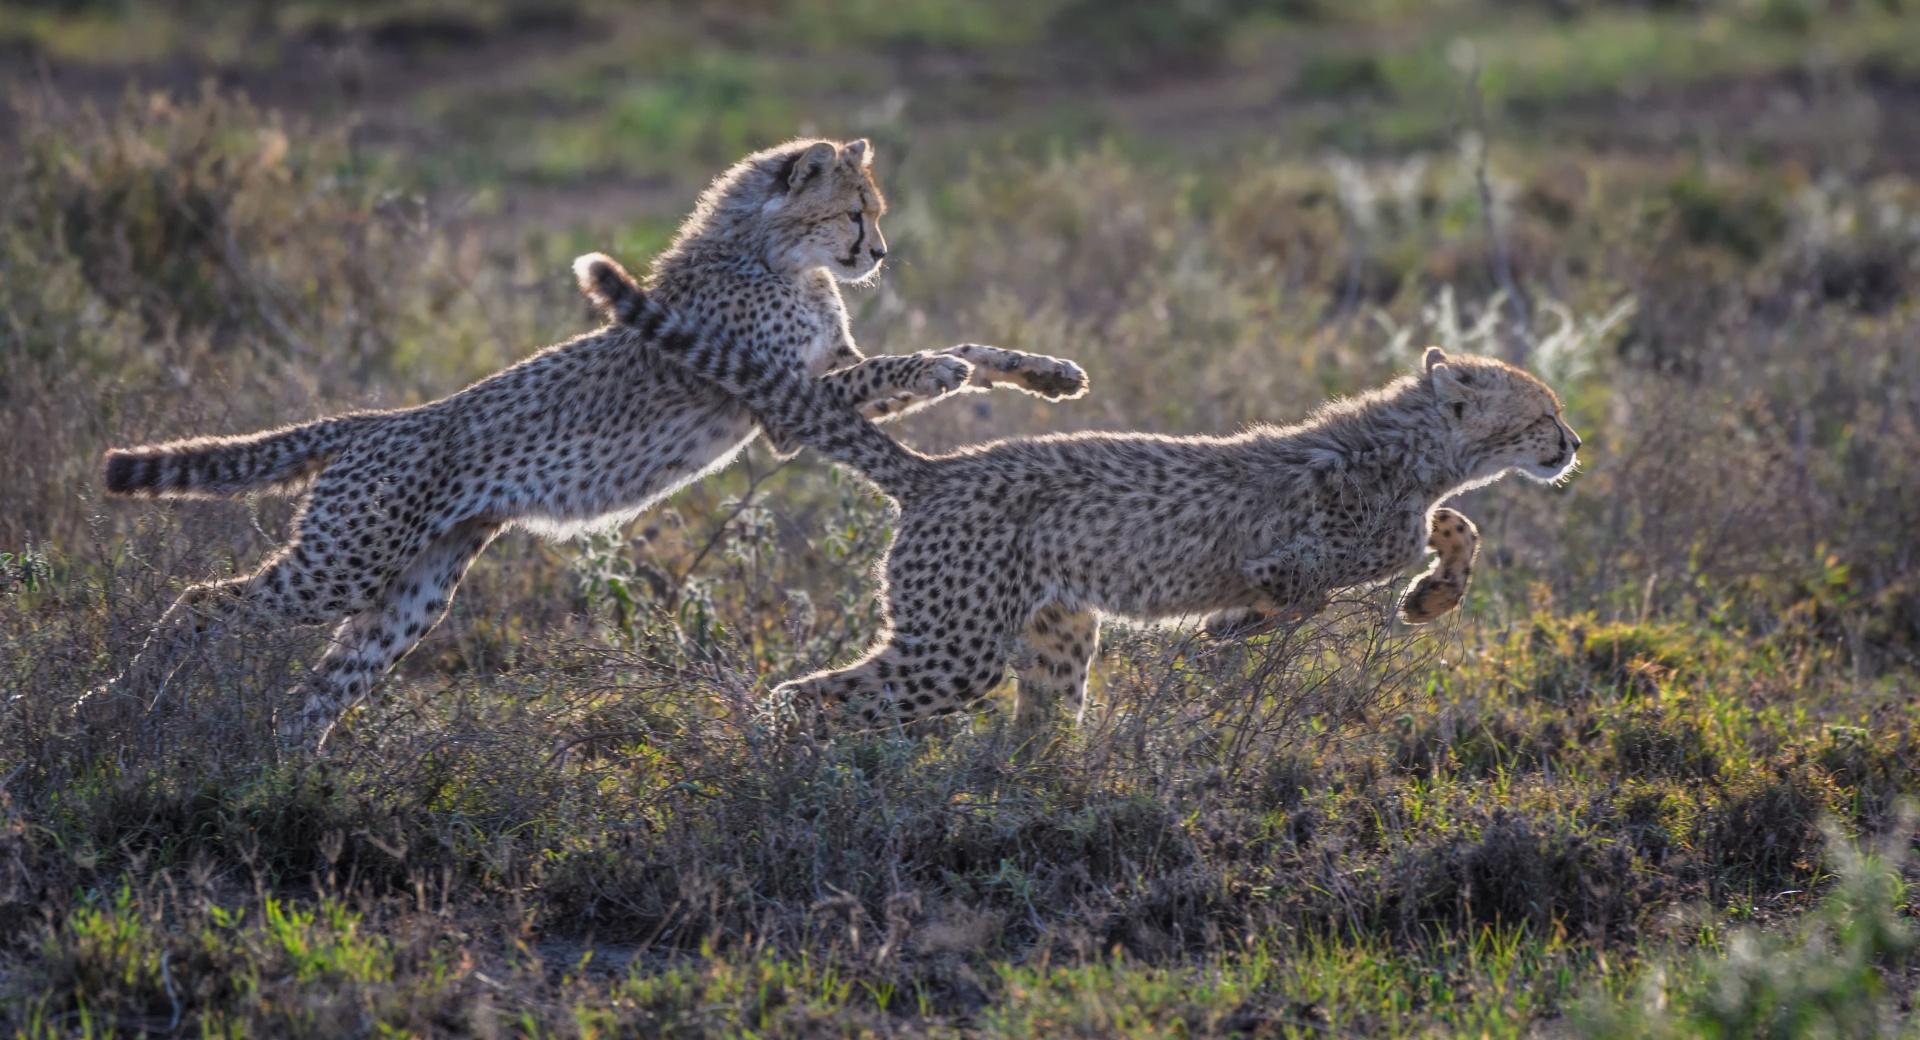 Cheetah Cubs Running at 2048 x 2048 iPad size wallpapers HD quality